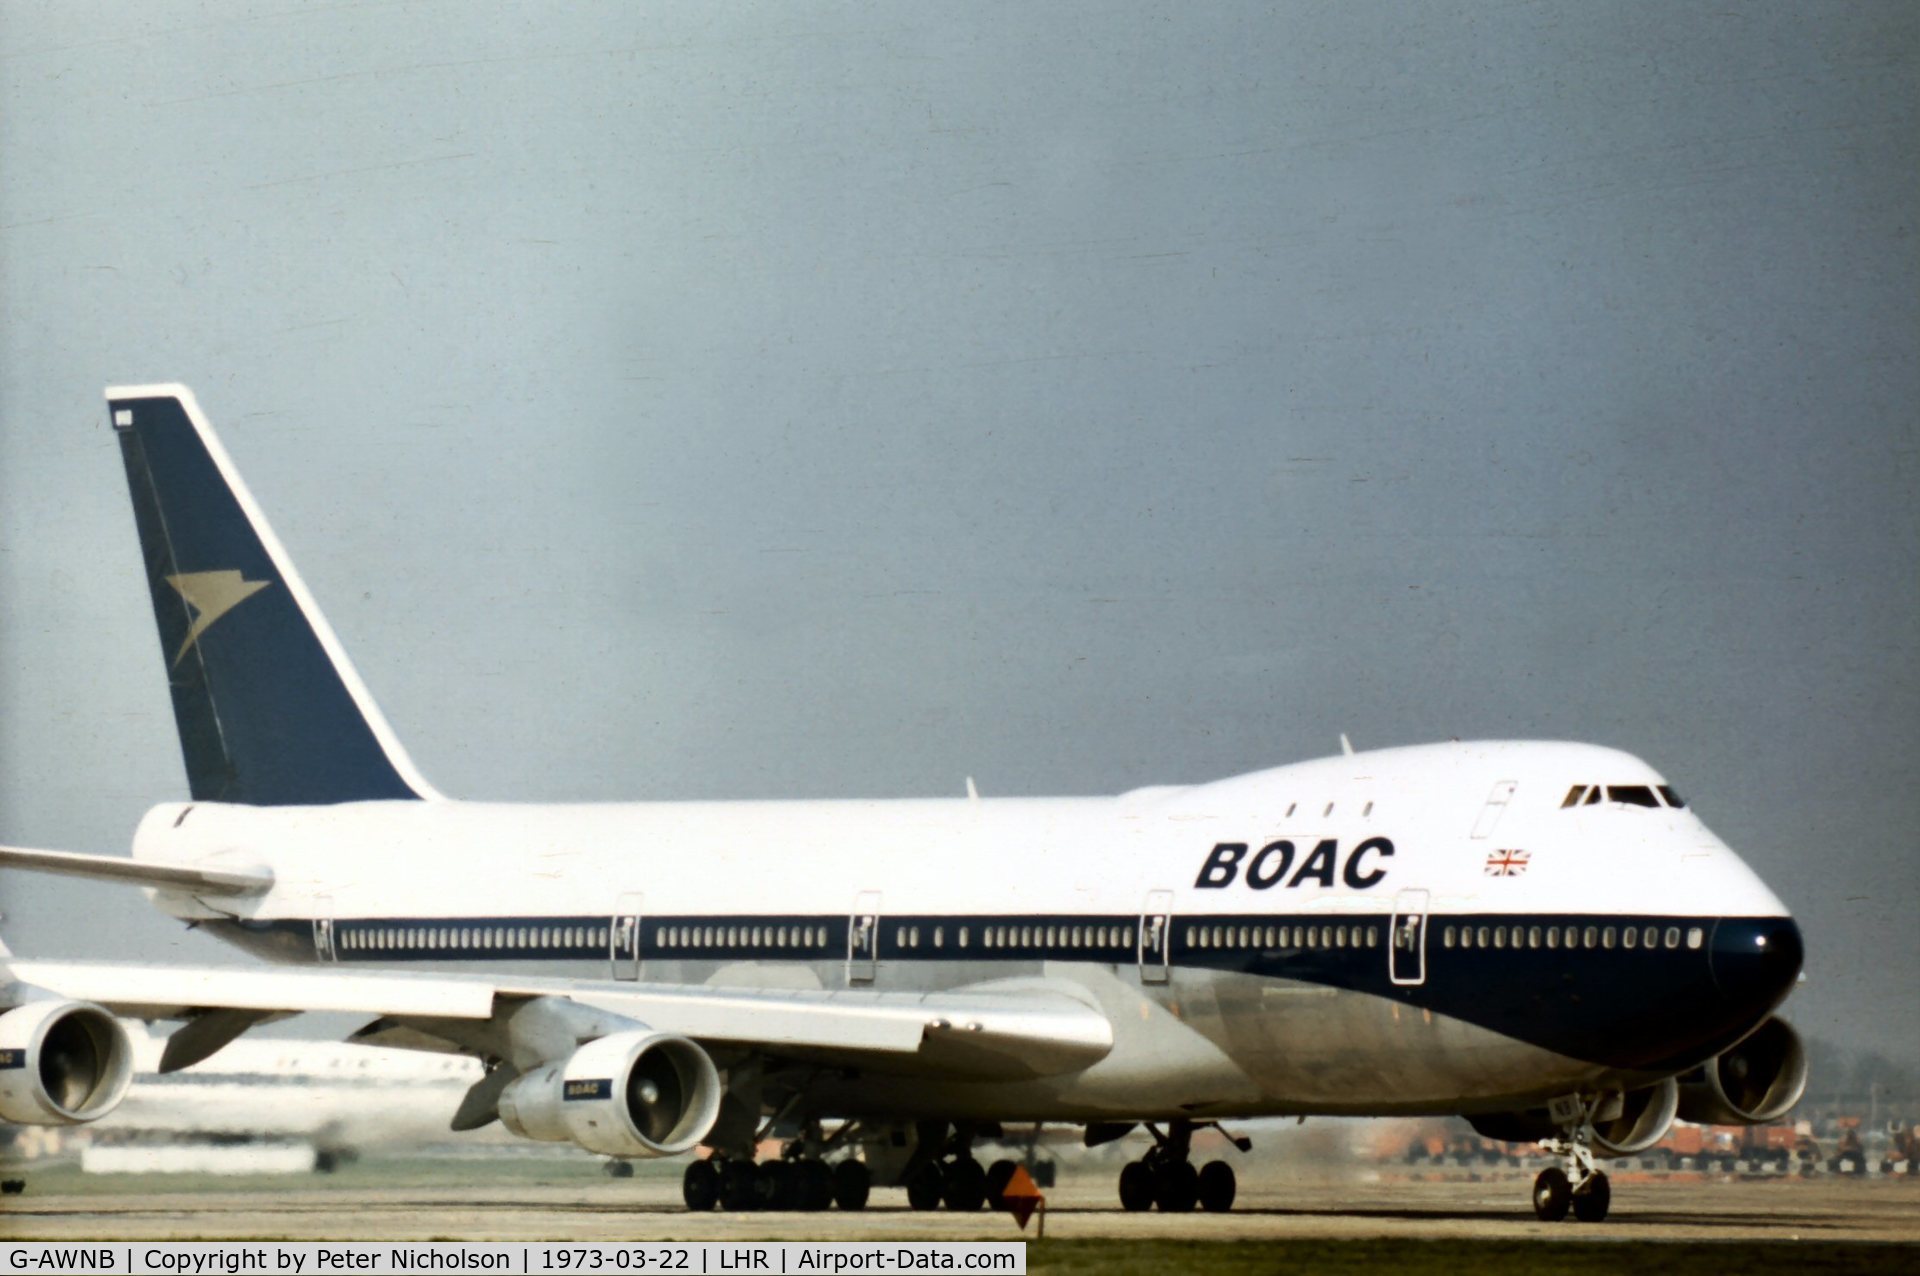 G-AWNB, 1970 Boeing 747-136 C/N 19762, BOAC flight departing London Heathrow in the Spring of 1973.